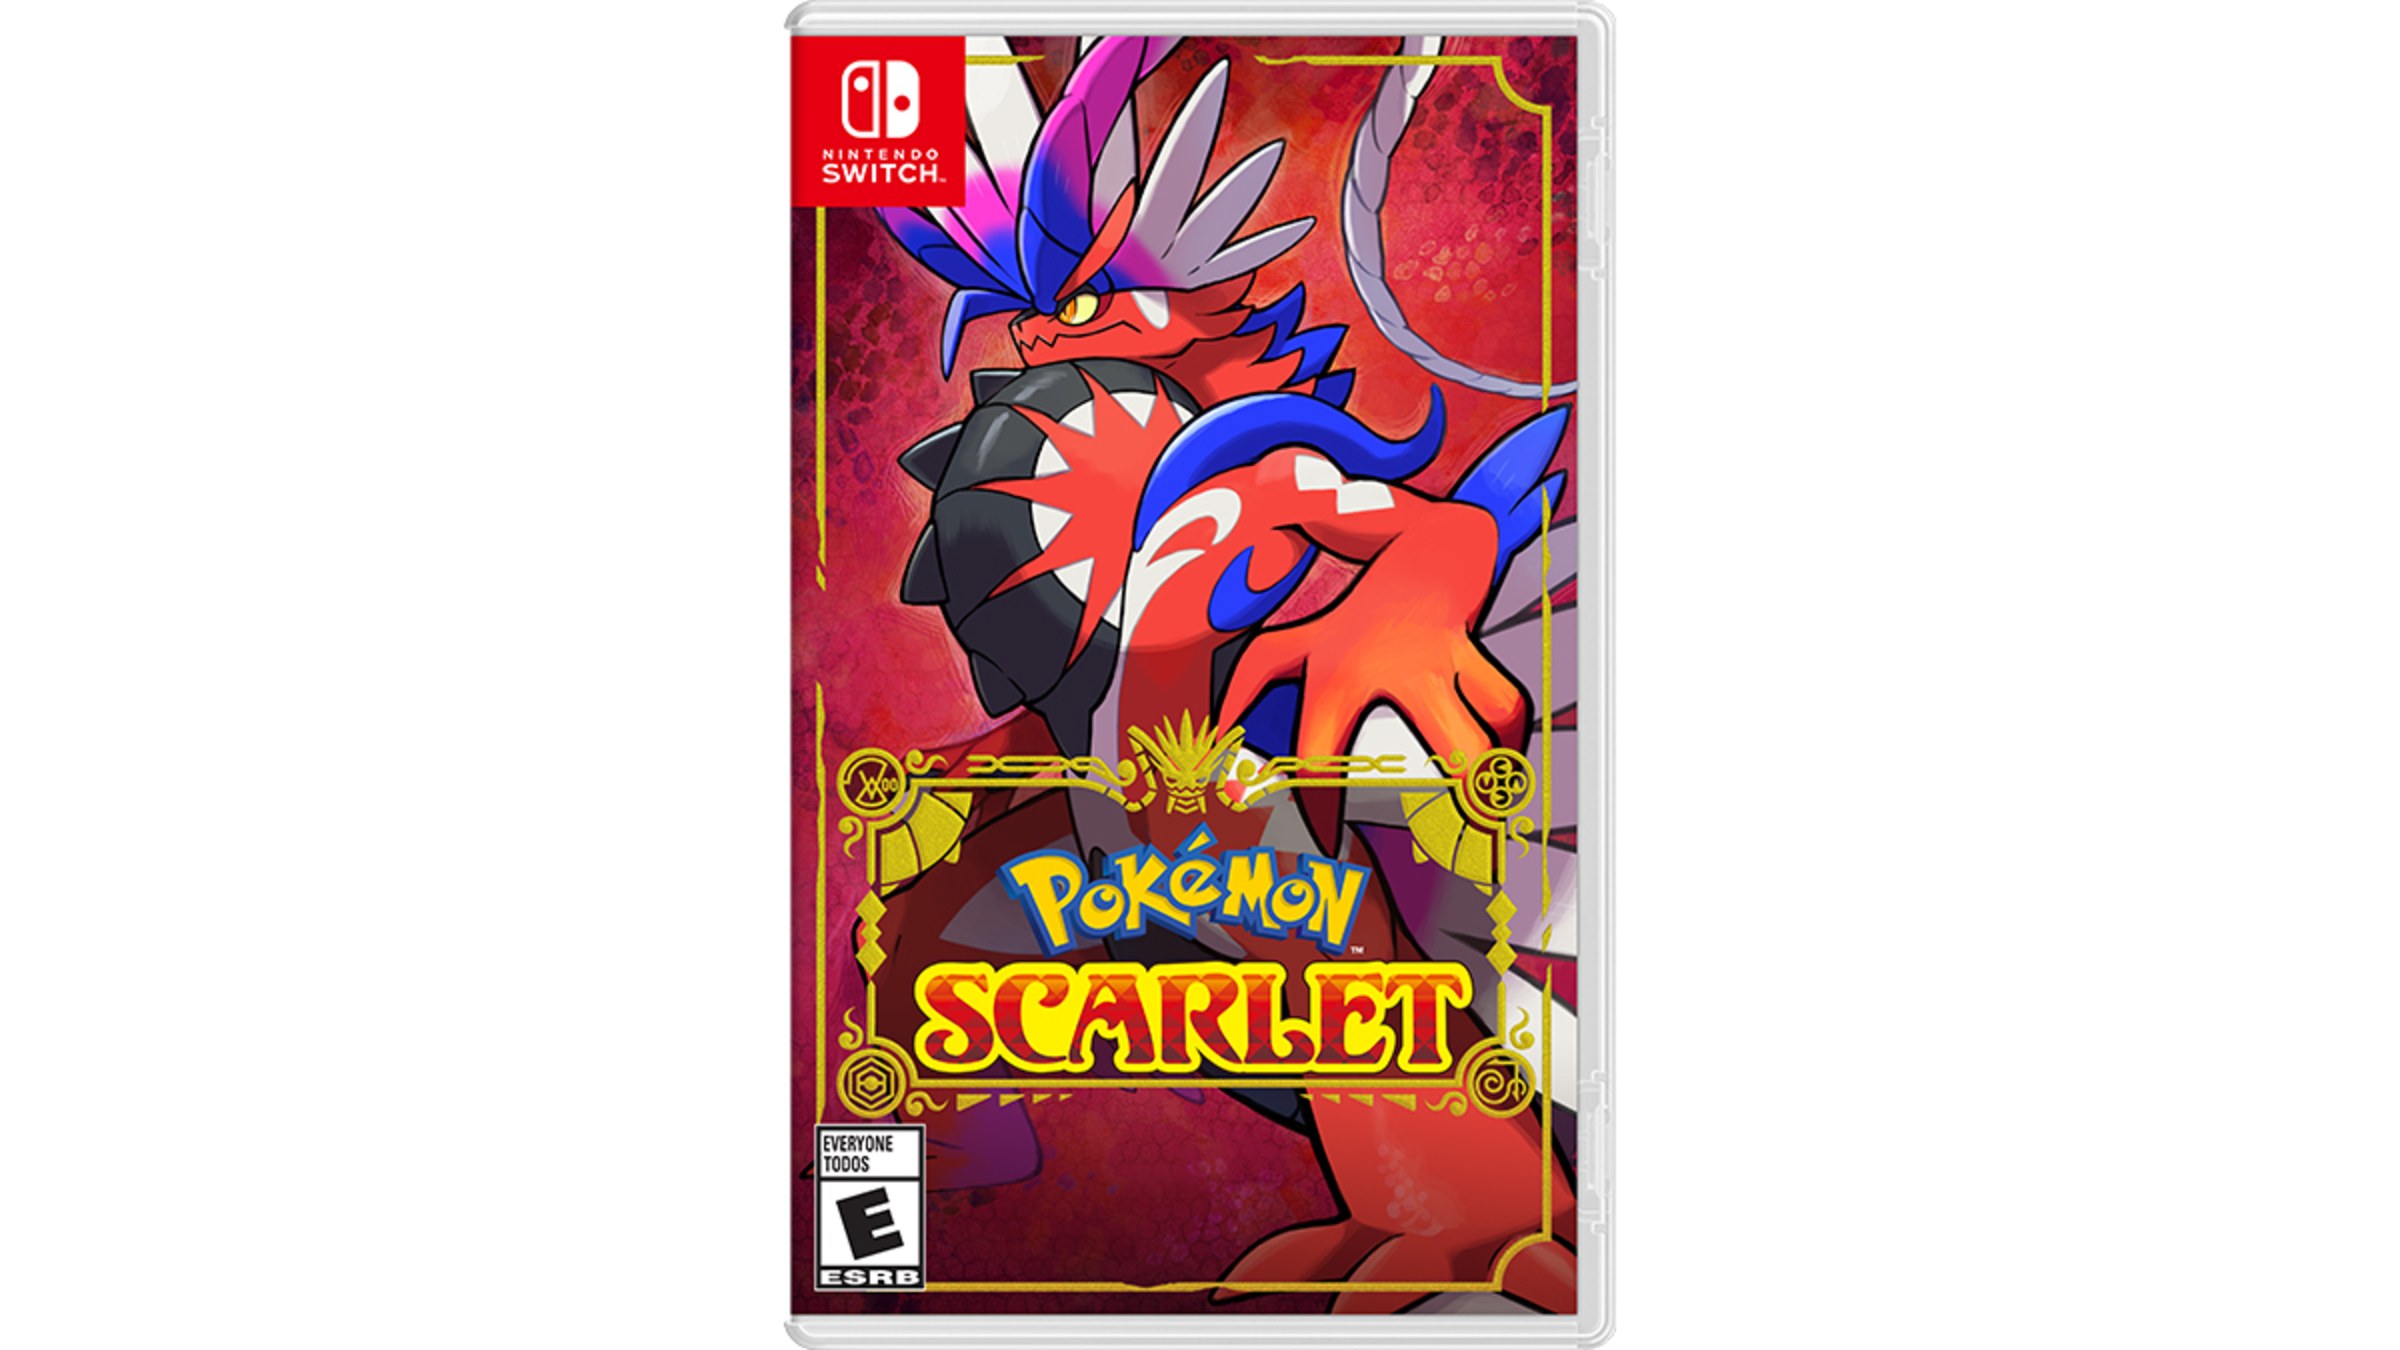 Pokémon™ Scarlet on Nintendo Switch – Colombian Peso